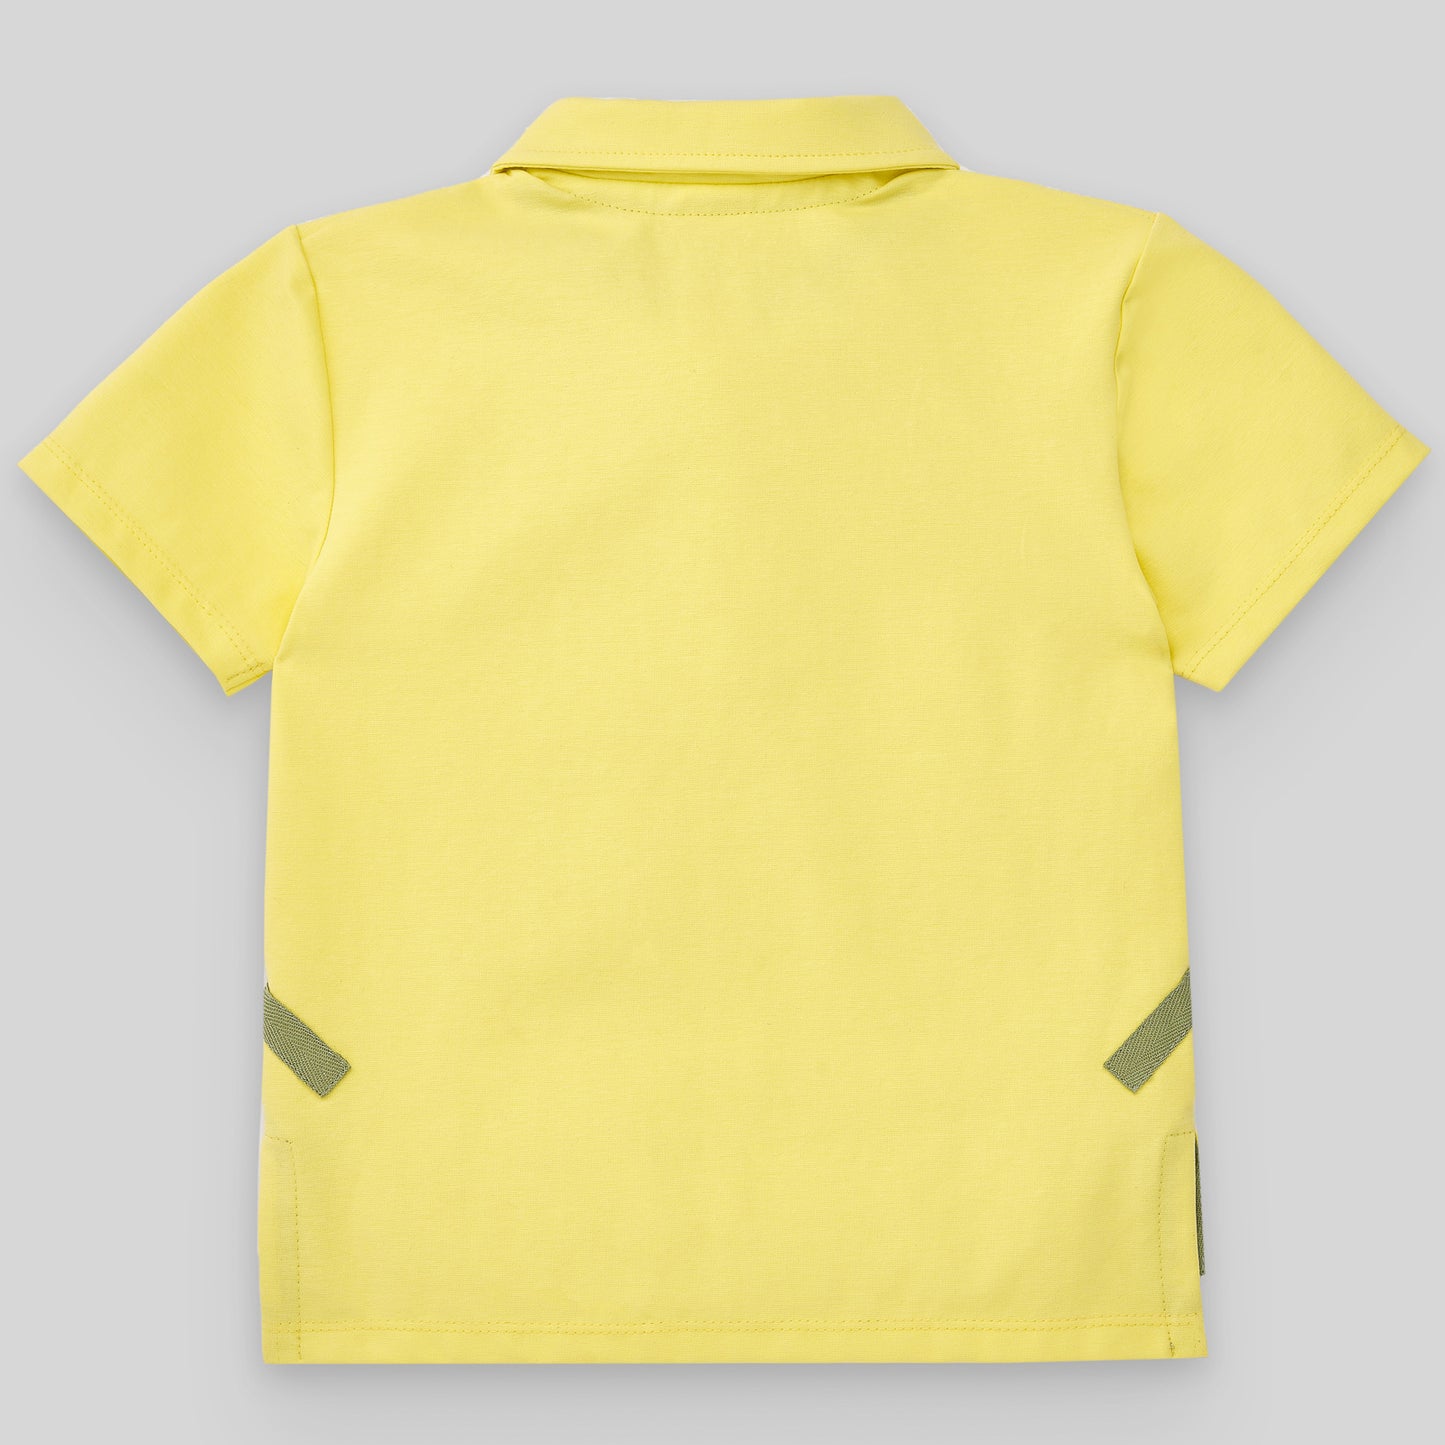 PAZ RODRIGUEZ Cotton Polo Lemon Yellow-Green